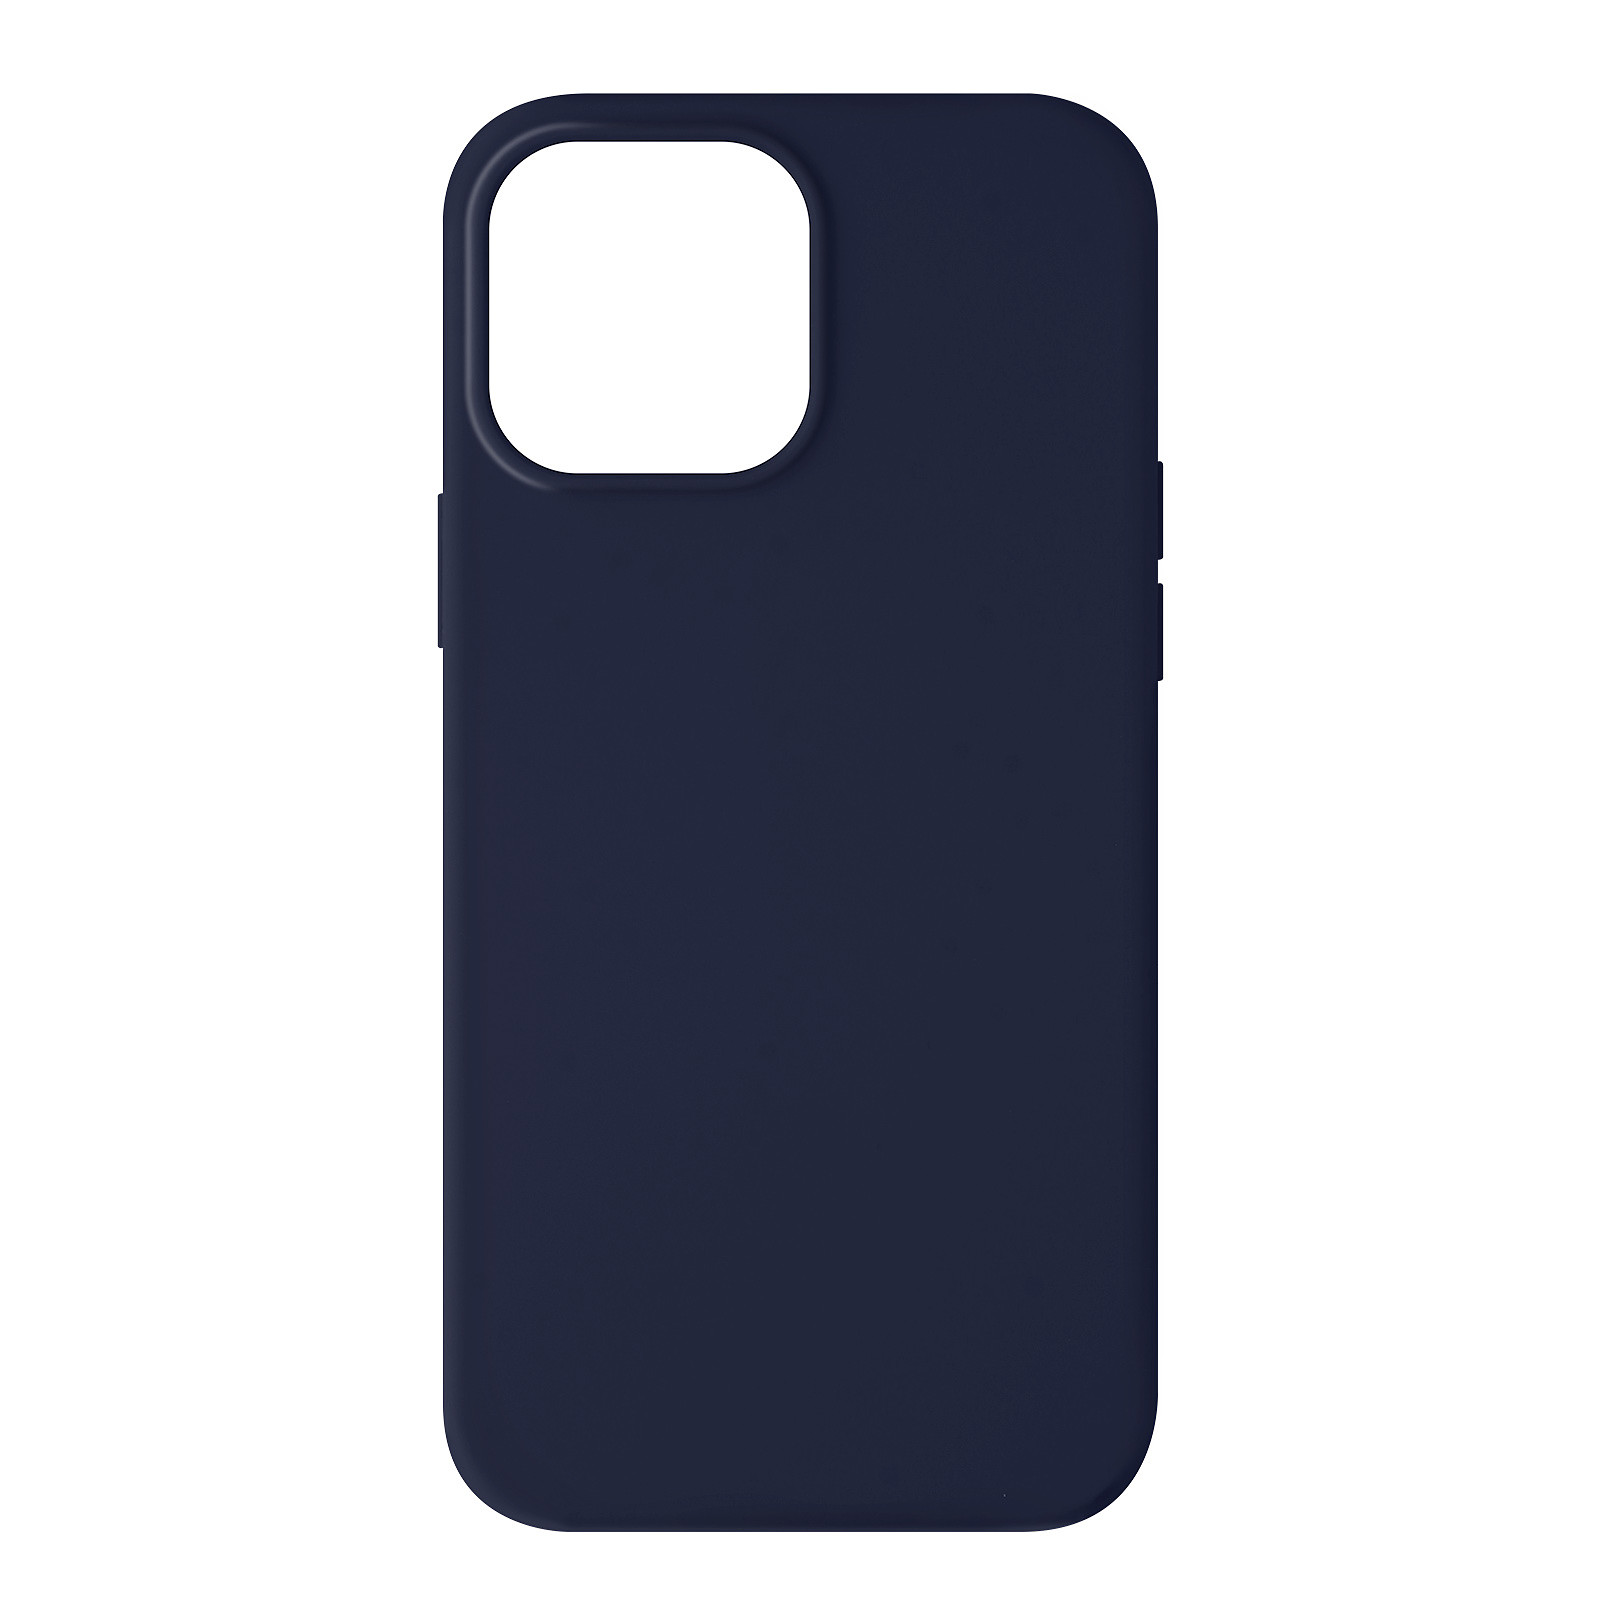 Avizar Coque pour iPhone 13 Pro Silicone Semi-rigide Finition Soft-touch Bleu Nuit - Coque telephone Avizar